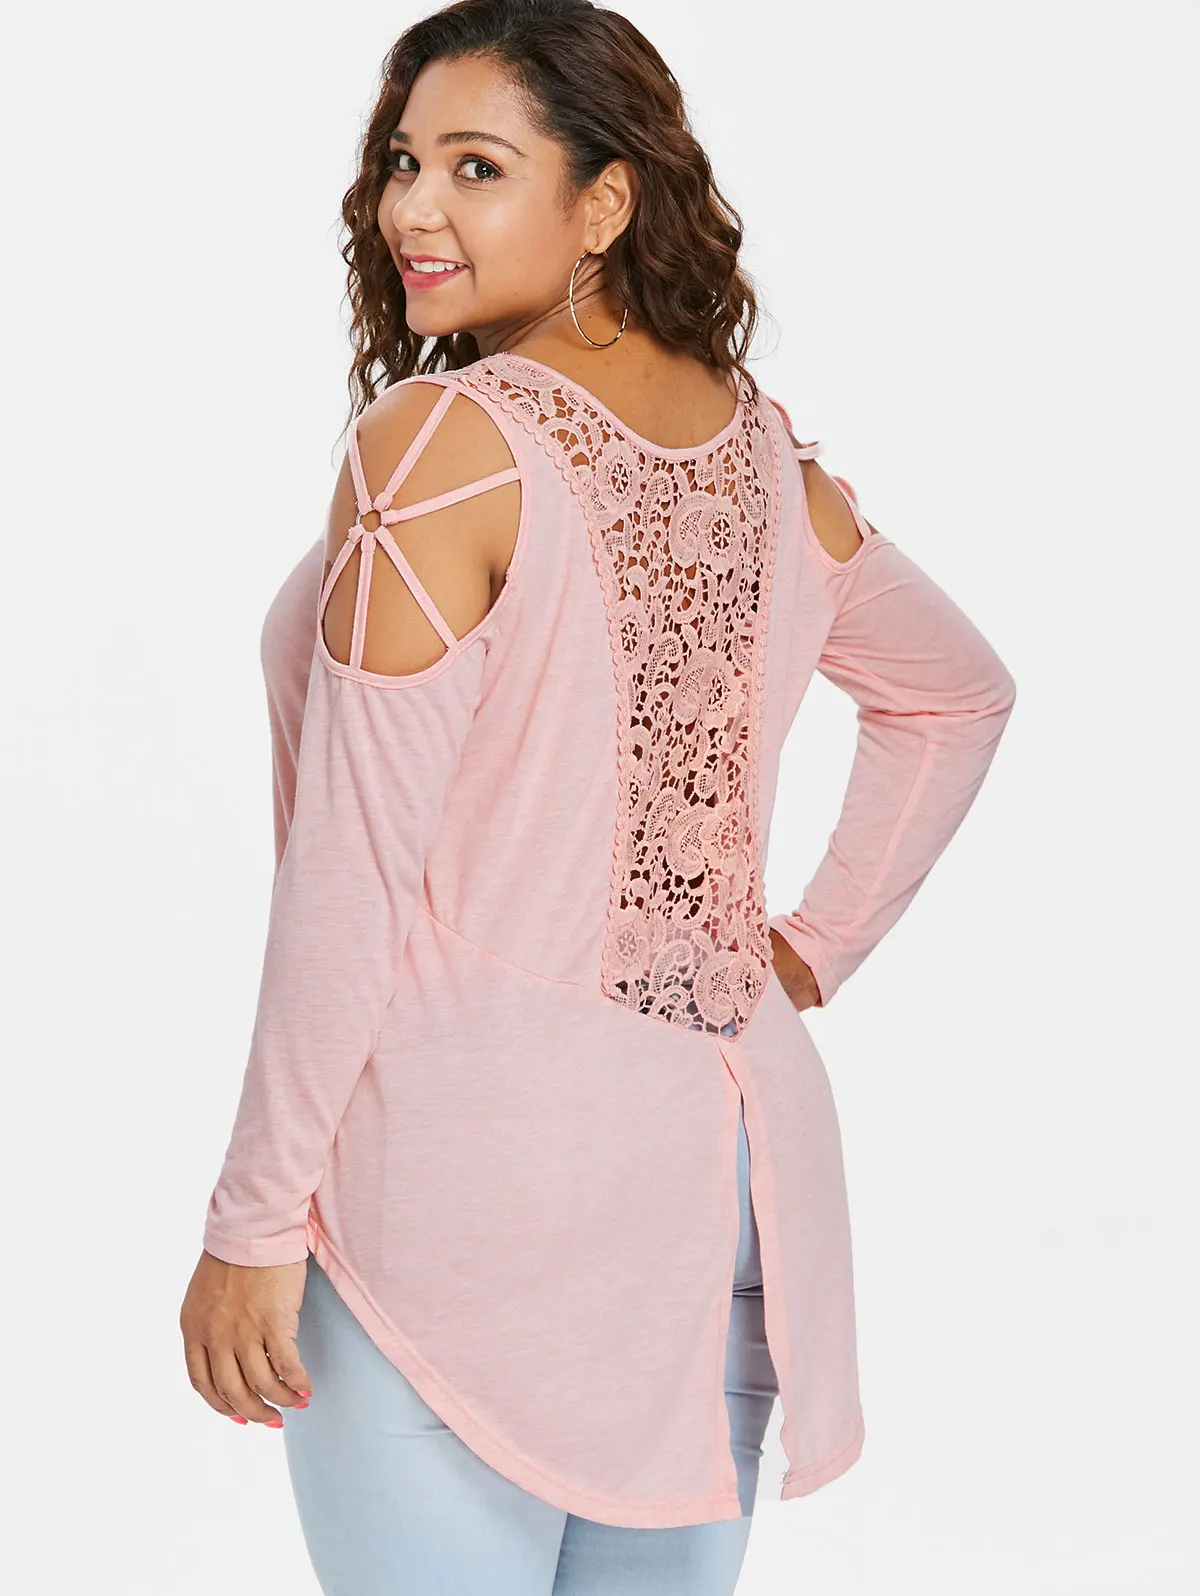 

Lortalen Casual Women Plus Size Cutwork Lace Insert T-Shirts Open Shoulder Long Sleeve O-Neck Pink Shirts Back Slit Tee Tops 5XL